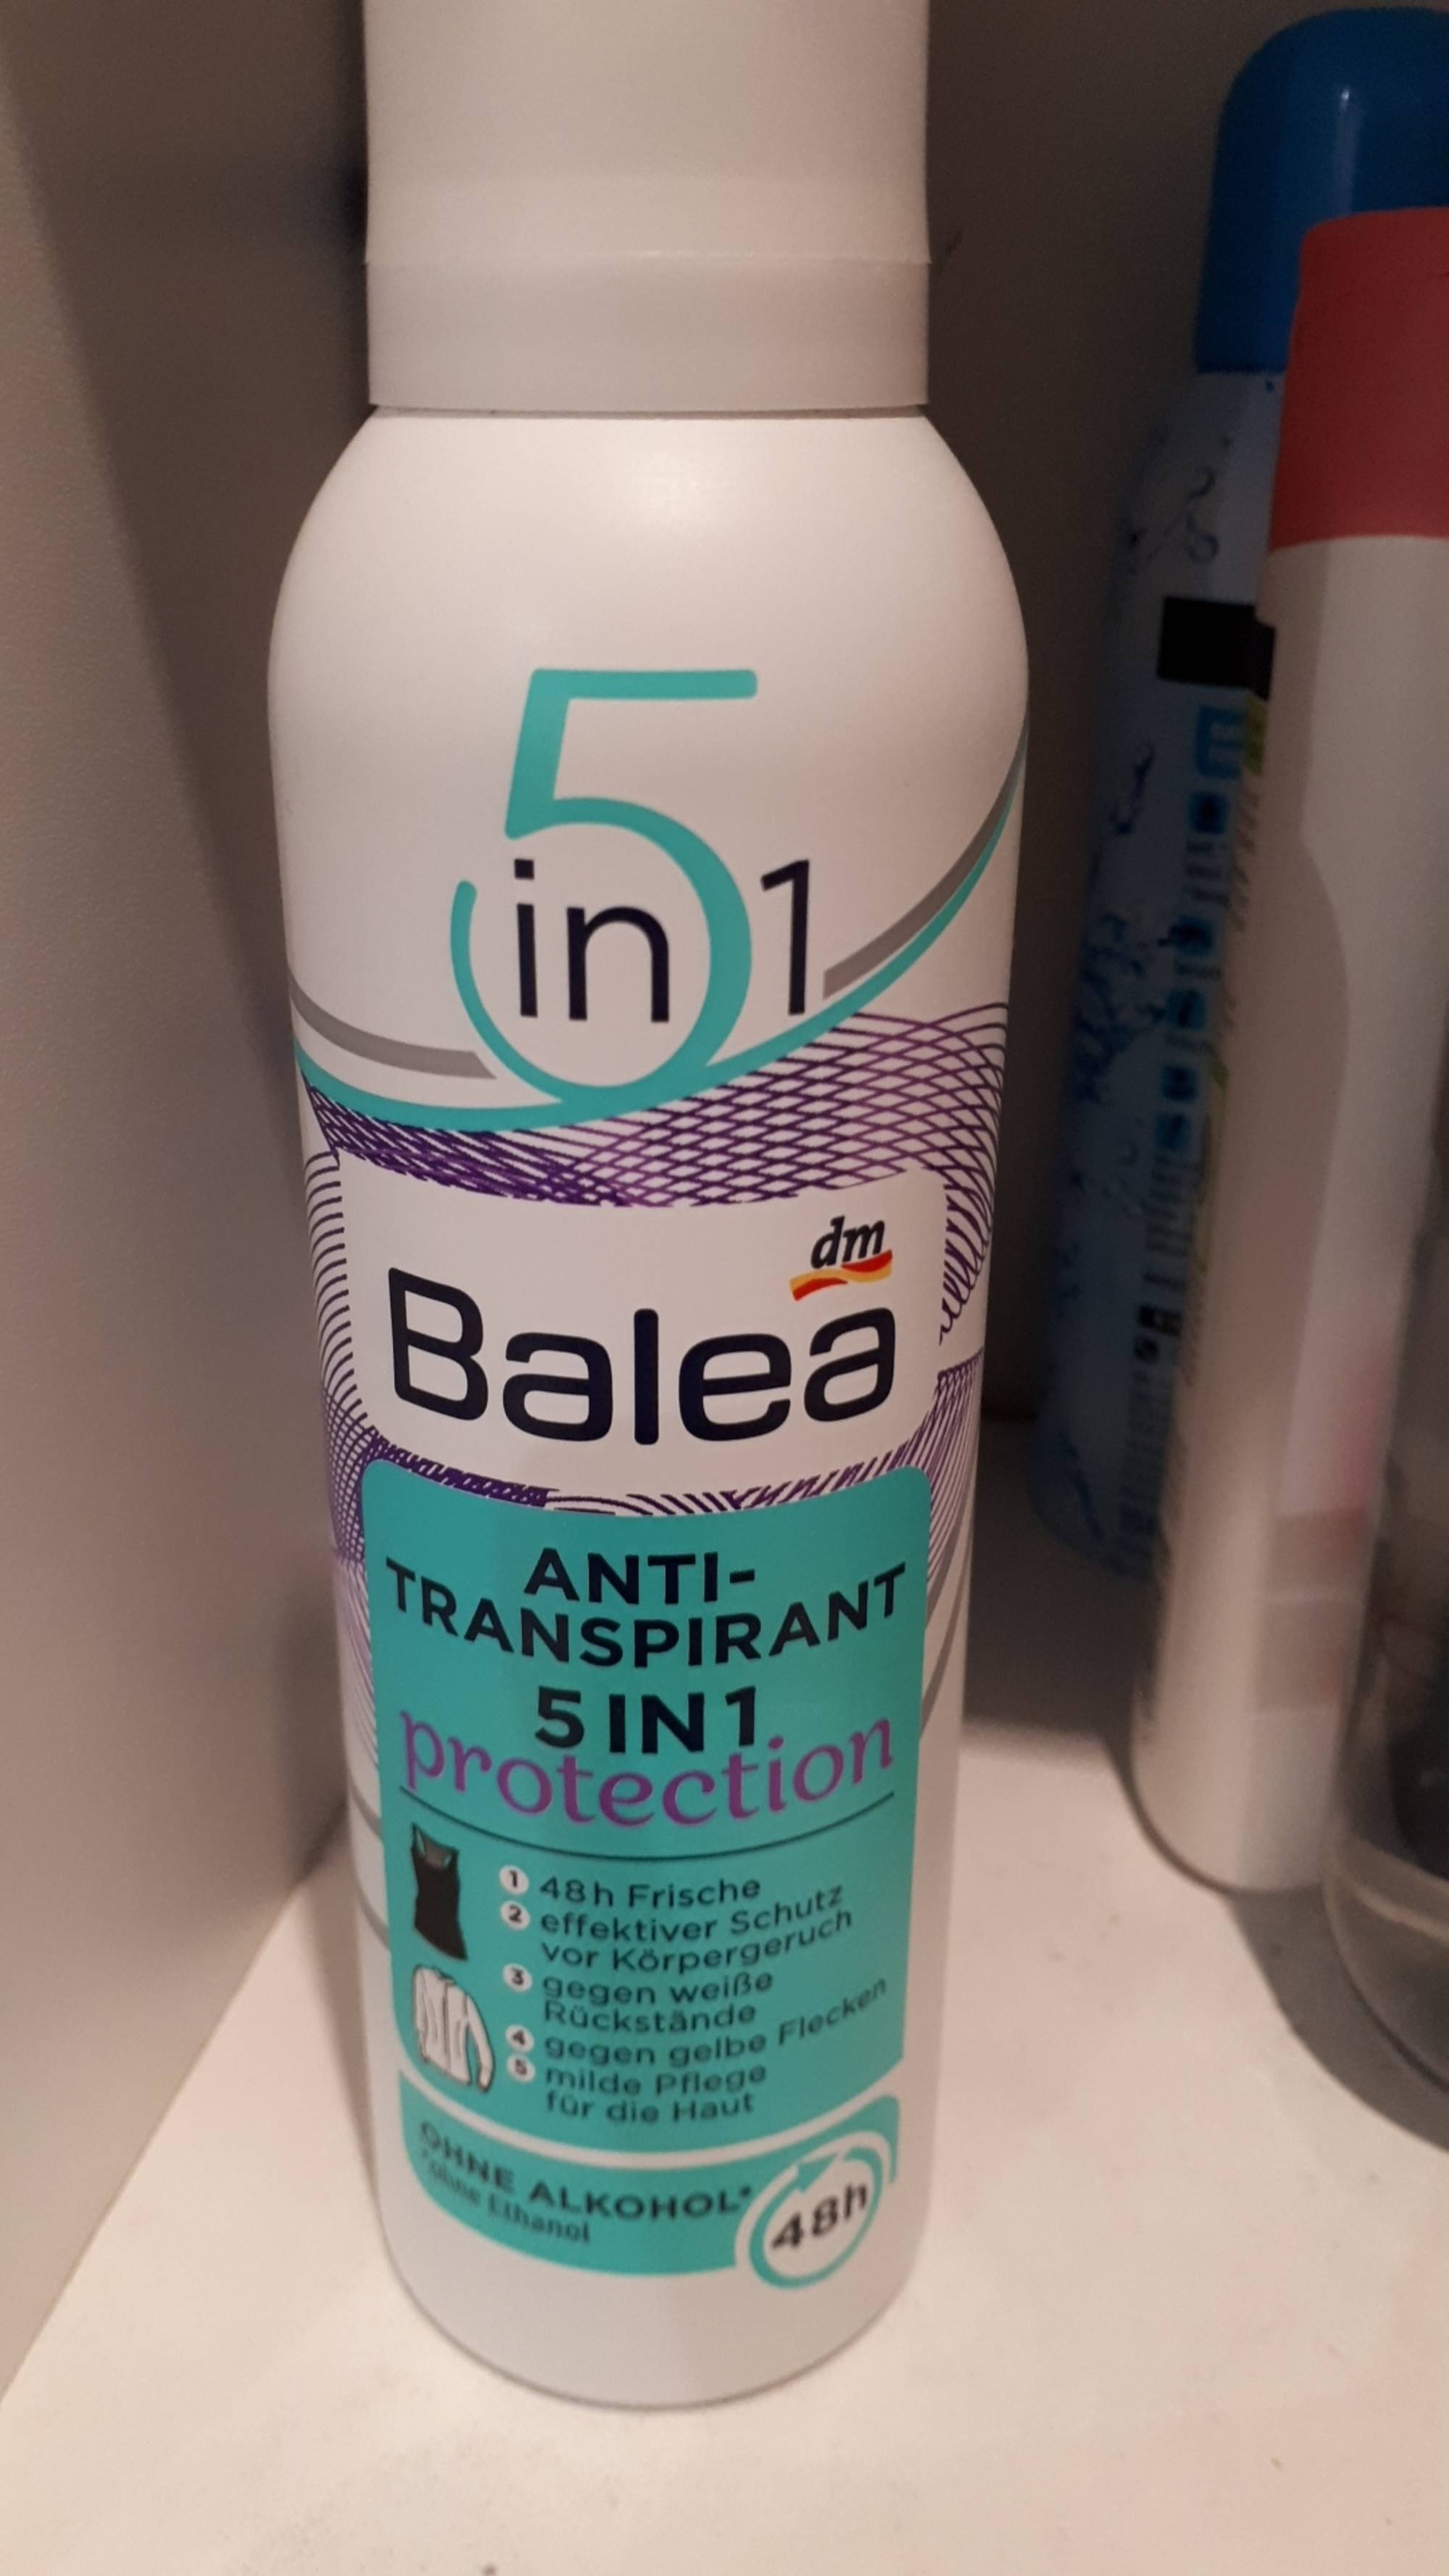 BALEA - Anti transpirant 5 in 1